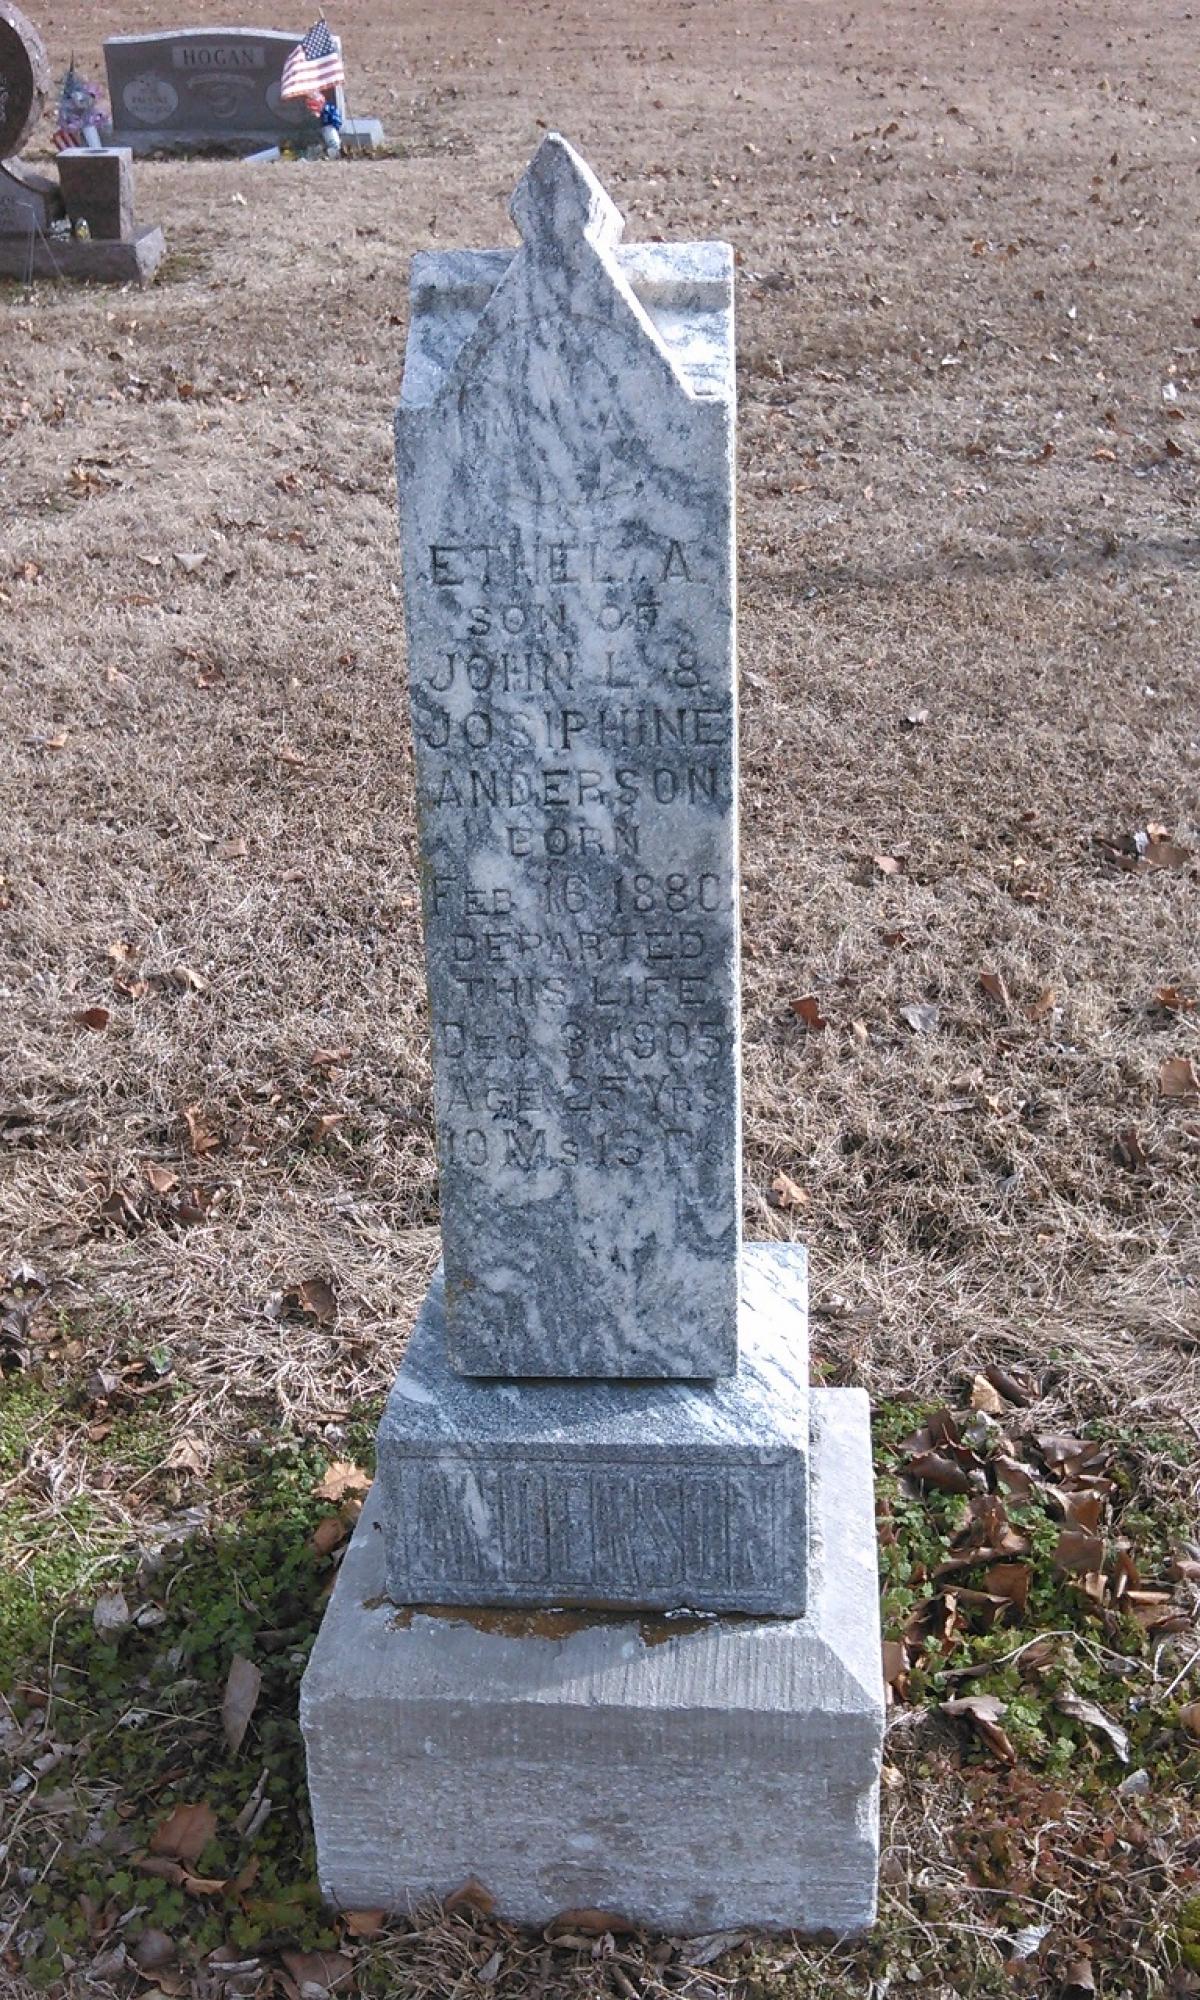 OK, Grove, Buzzard Cemetery, Anderson, Ethel A. Headstone